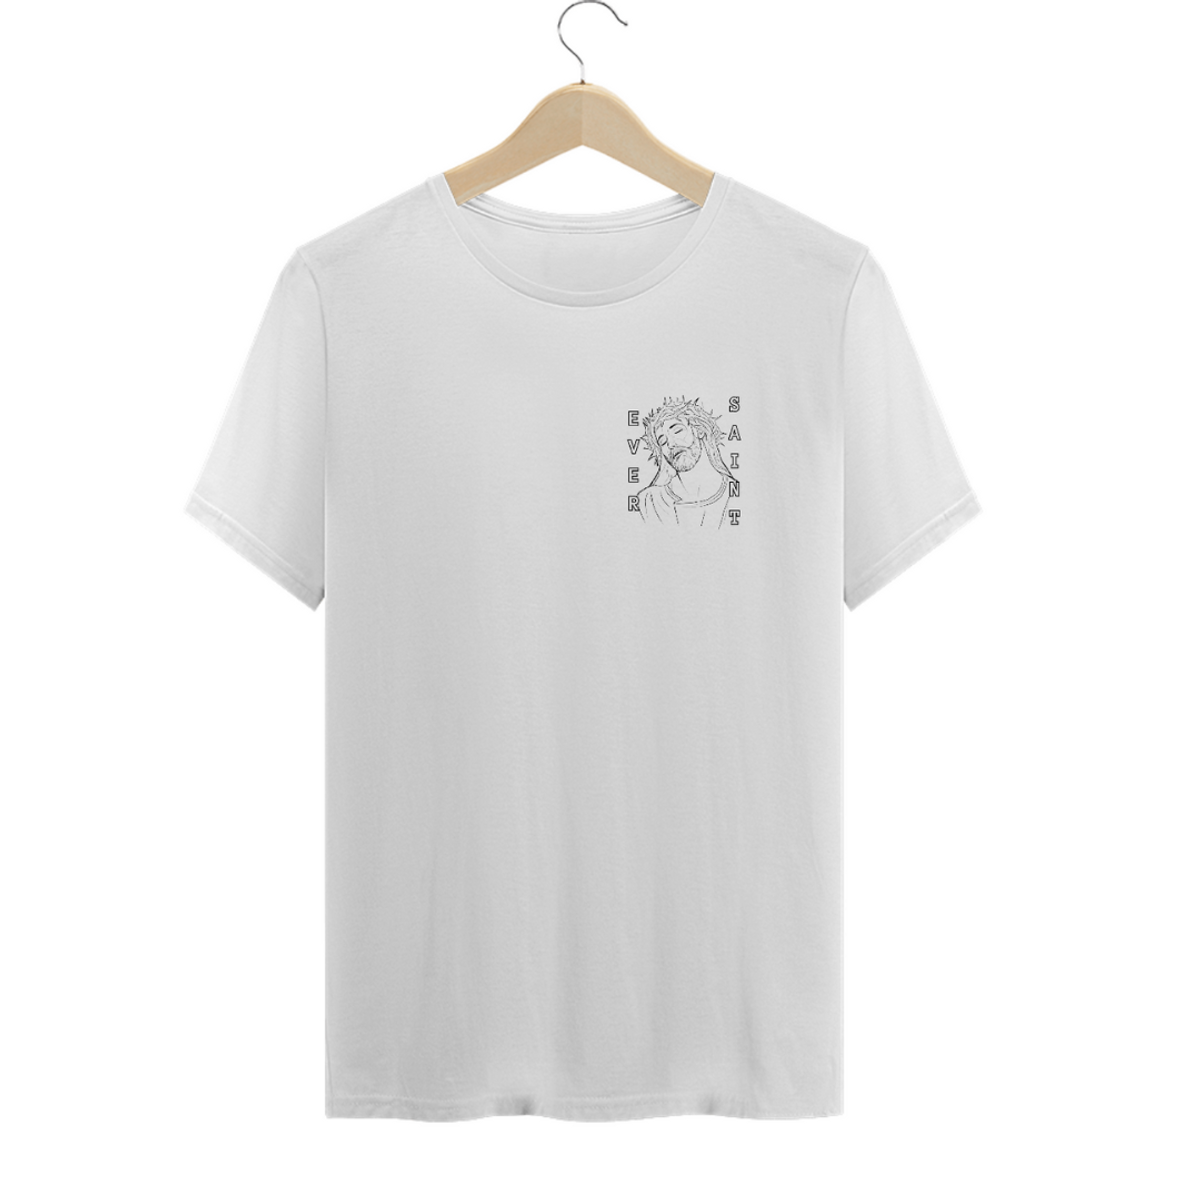 Nome do produto: Camiseta Ever Saint branca efesios